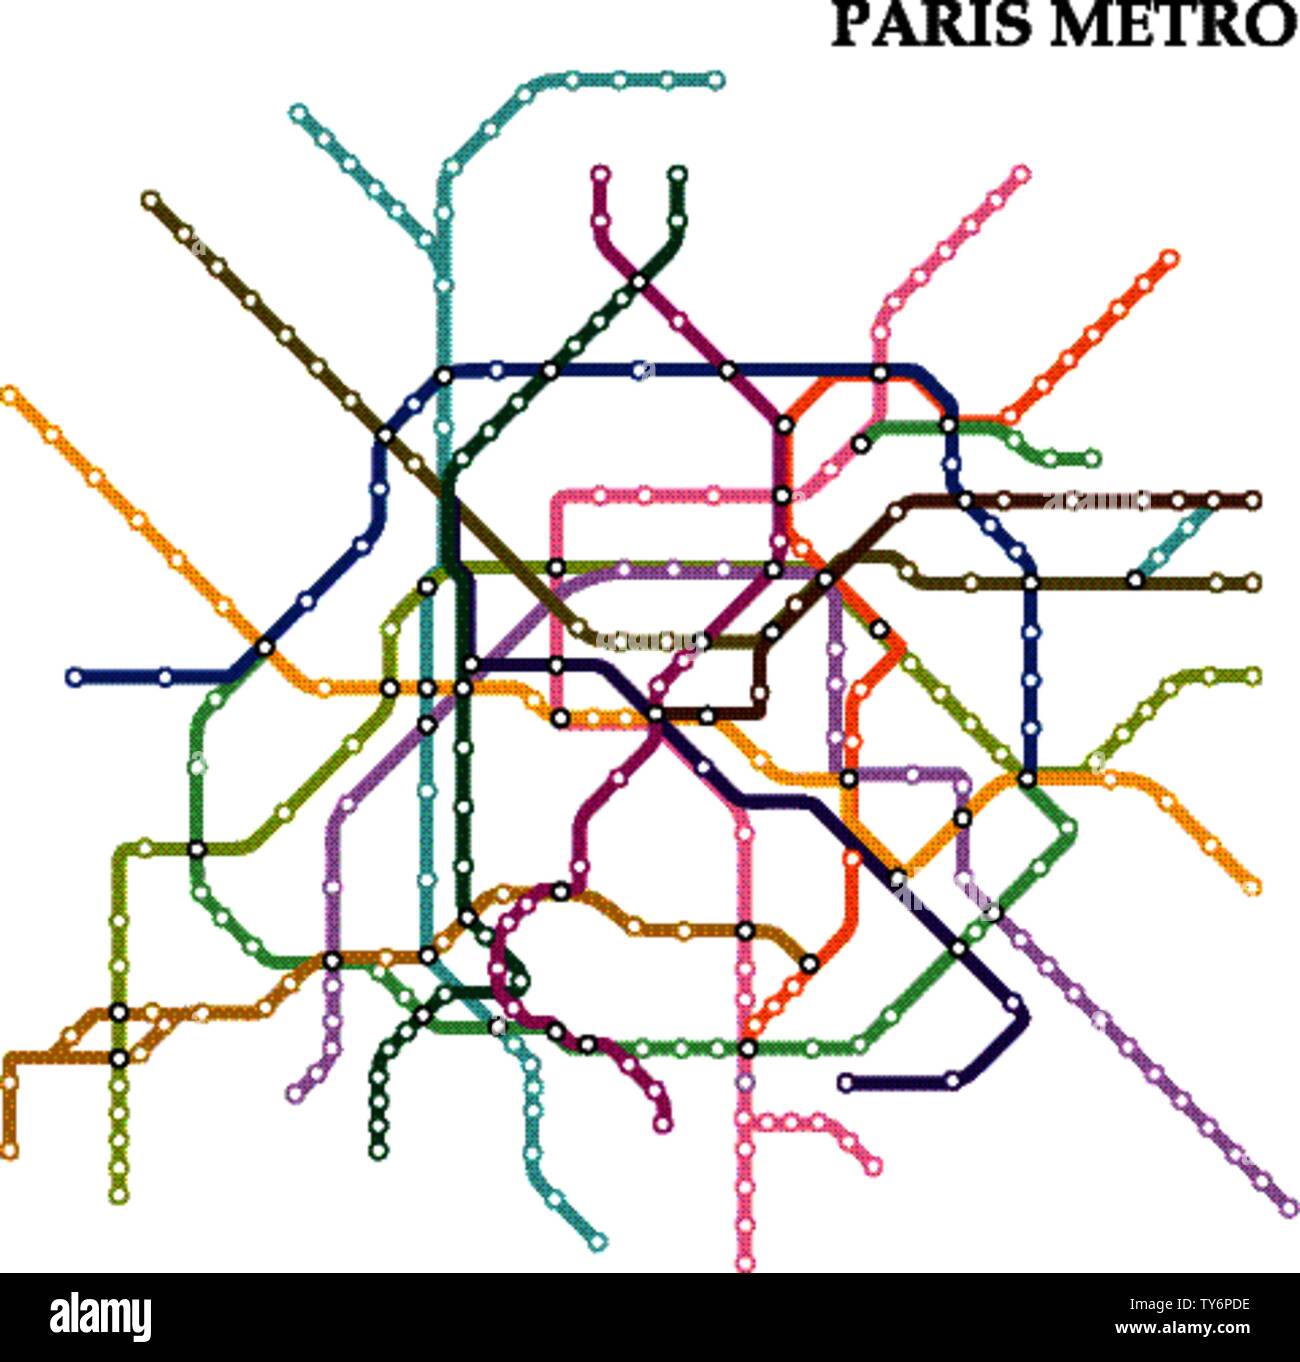 Karte der Pariser U-Bahn, U-Bahn, Vorlage der City Transport System für U-Straße. Stock Vektor